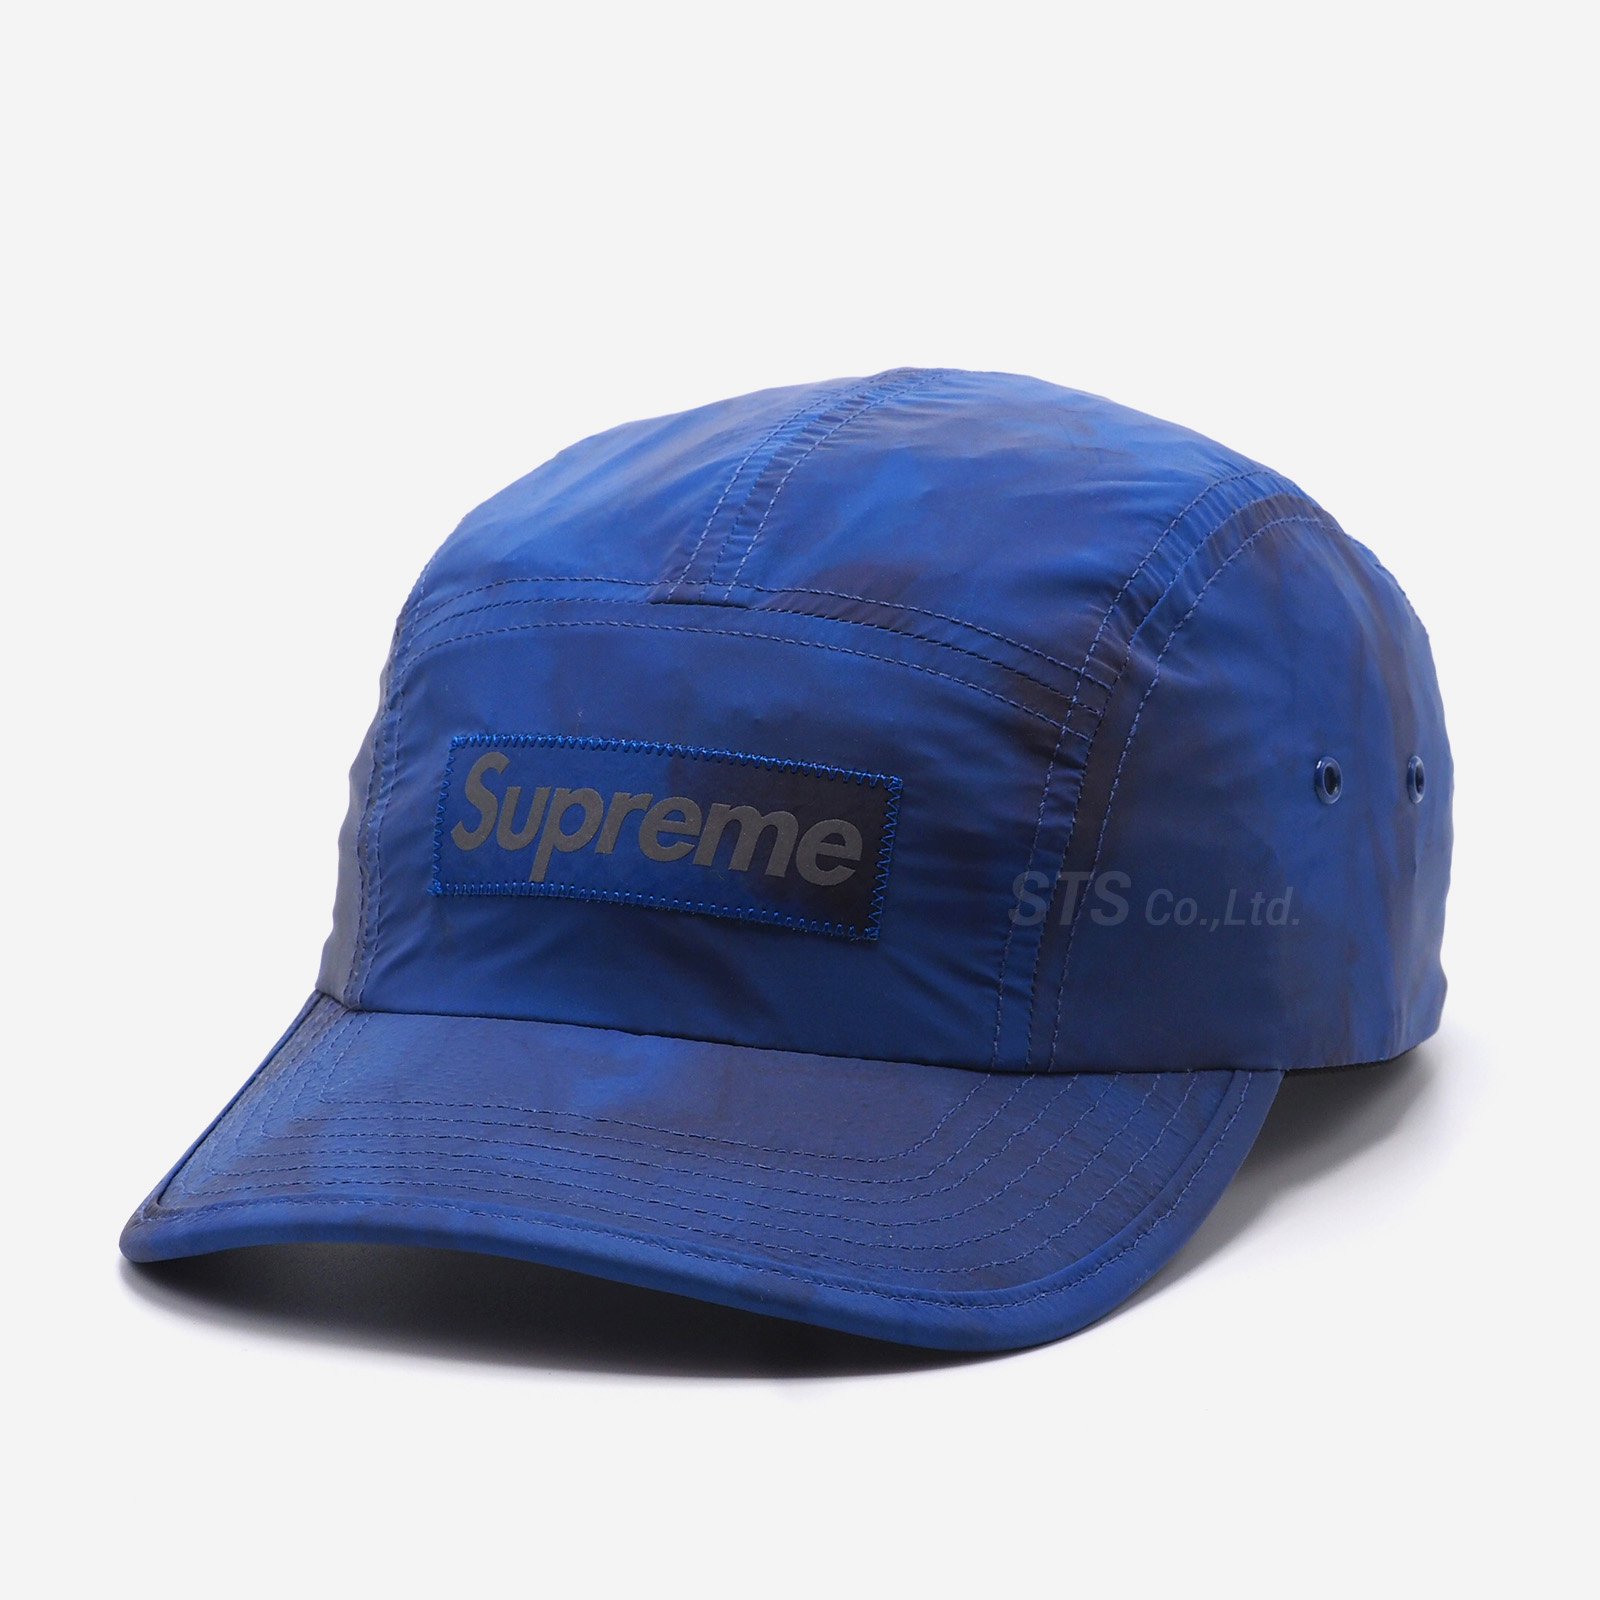 supreme reflective camp cap